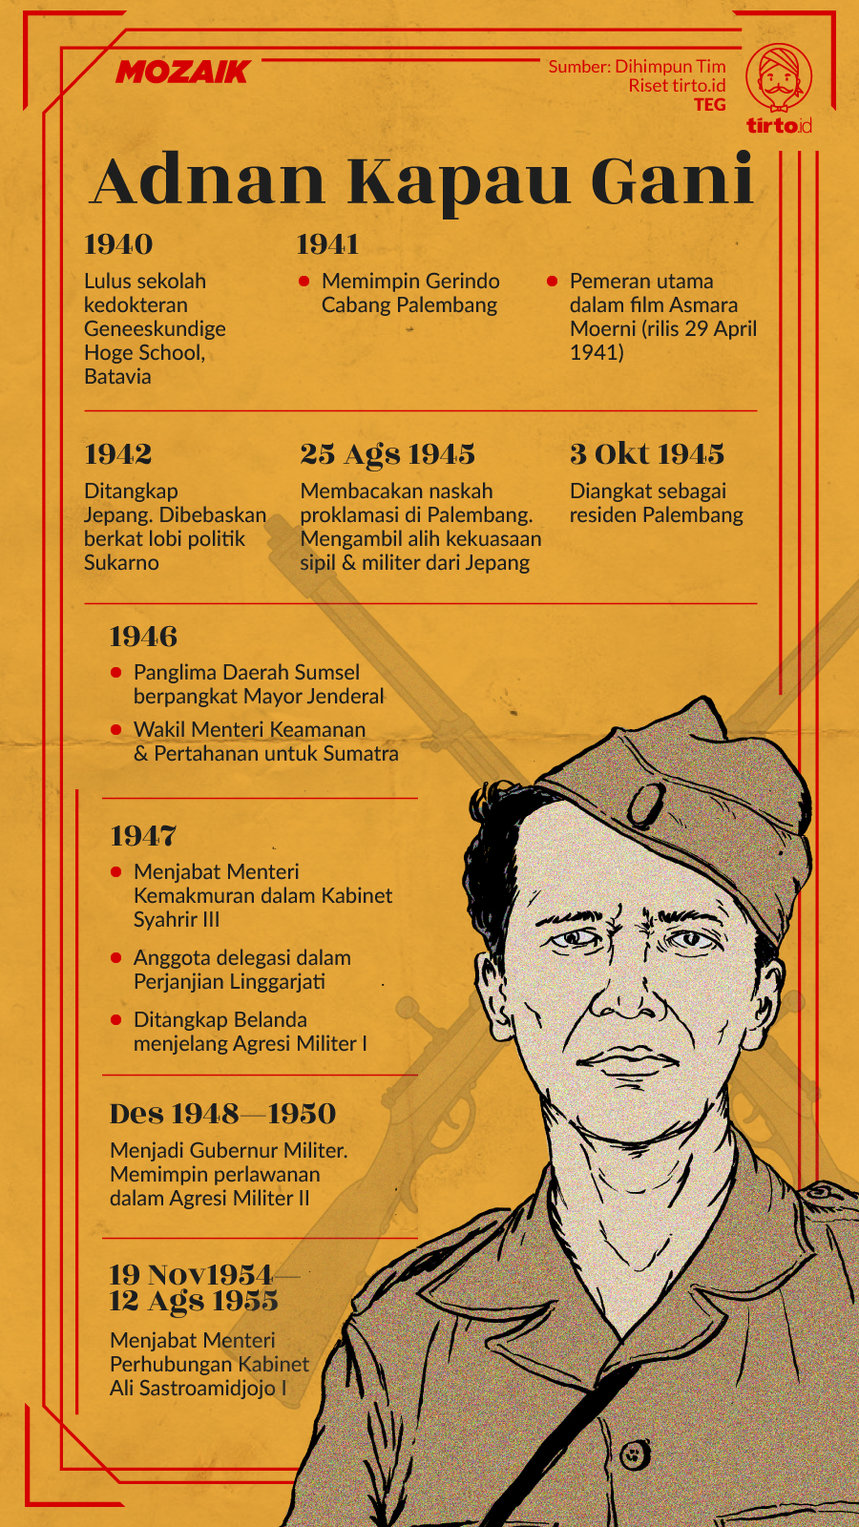 Infografik Mozaik Adnan Kapau Gani